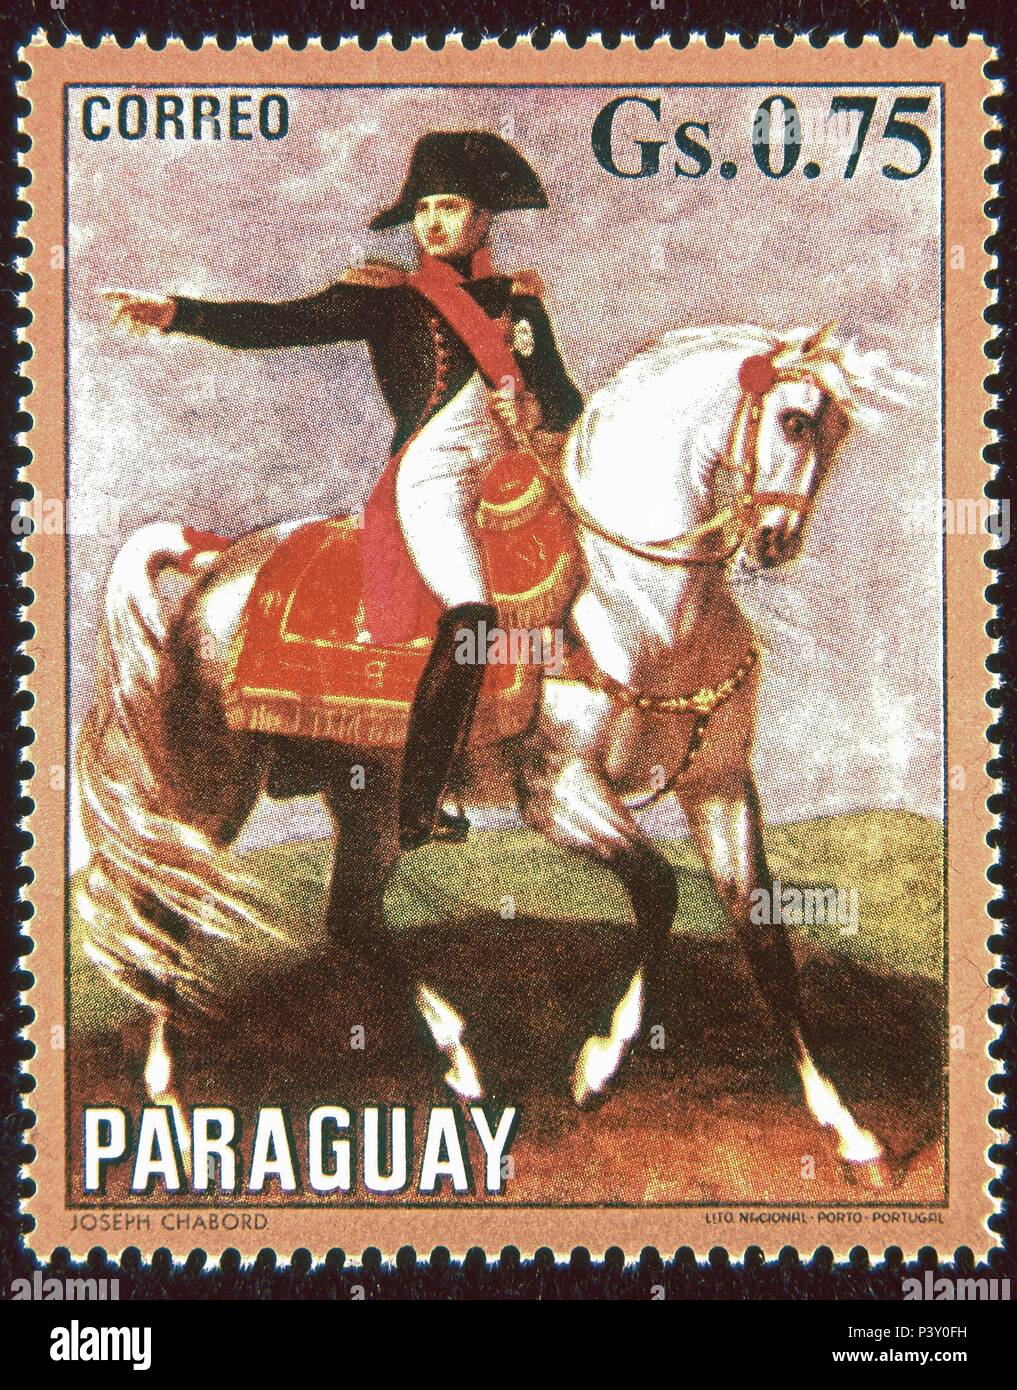 SELLO DE PARAGUAY - NAPOLÉON UN CABALLO DE JOSEPH CHABORD. Auteur : Joseph Chabord (1786-1848). Banque D'Images